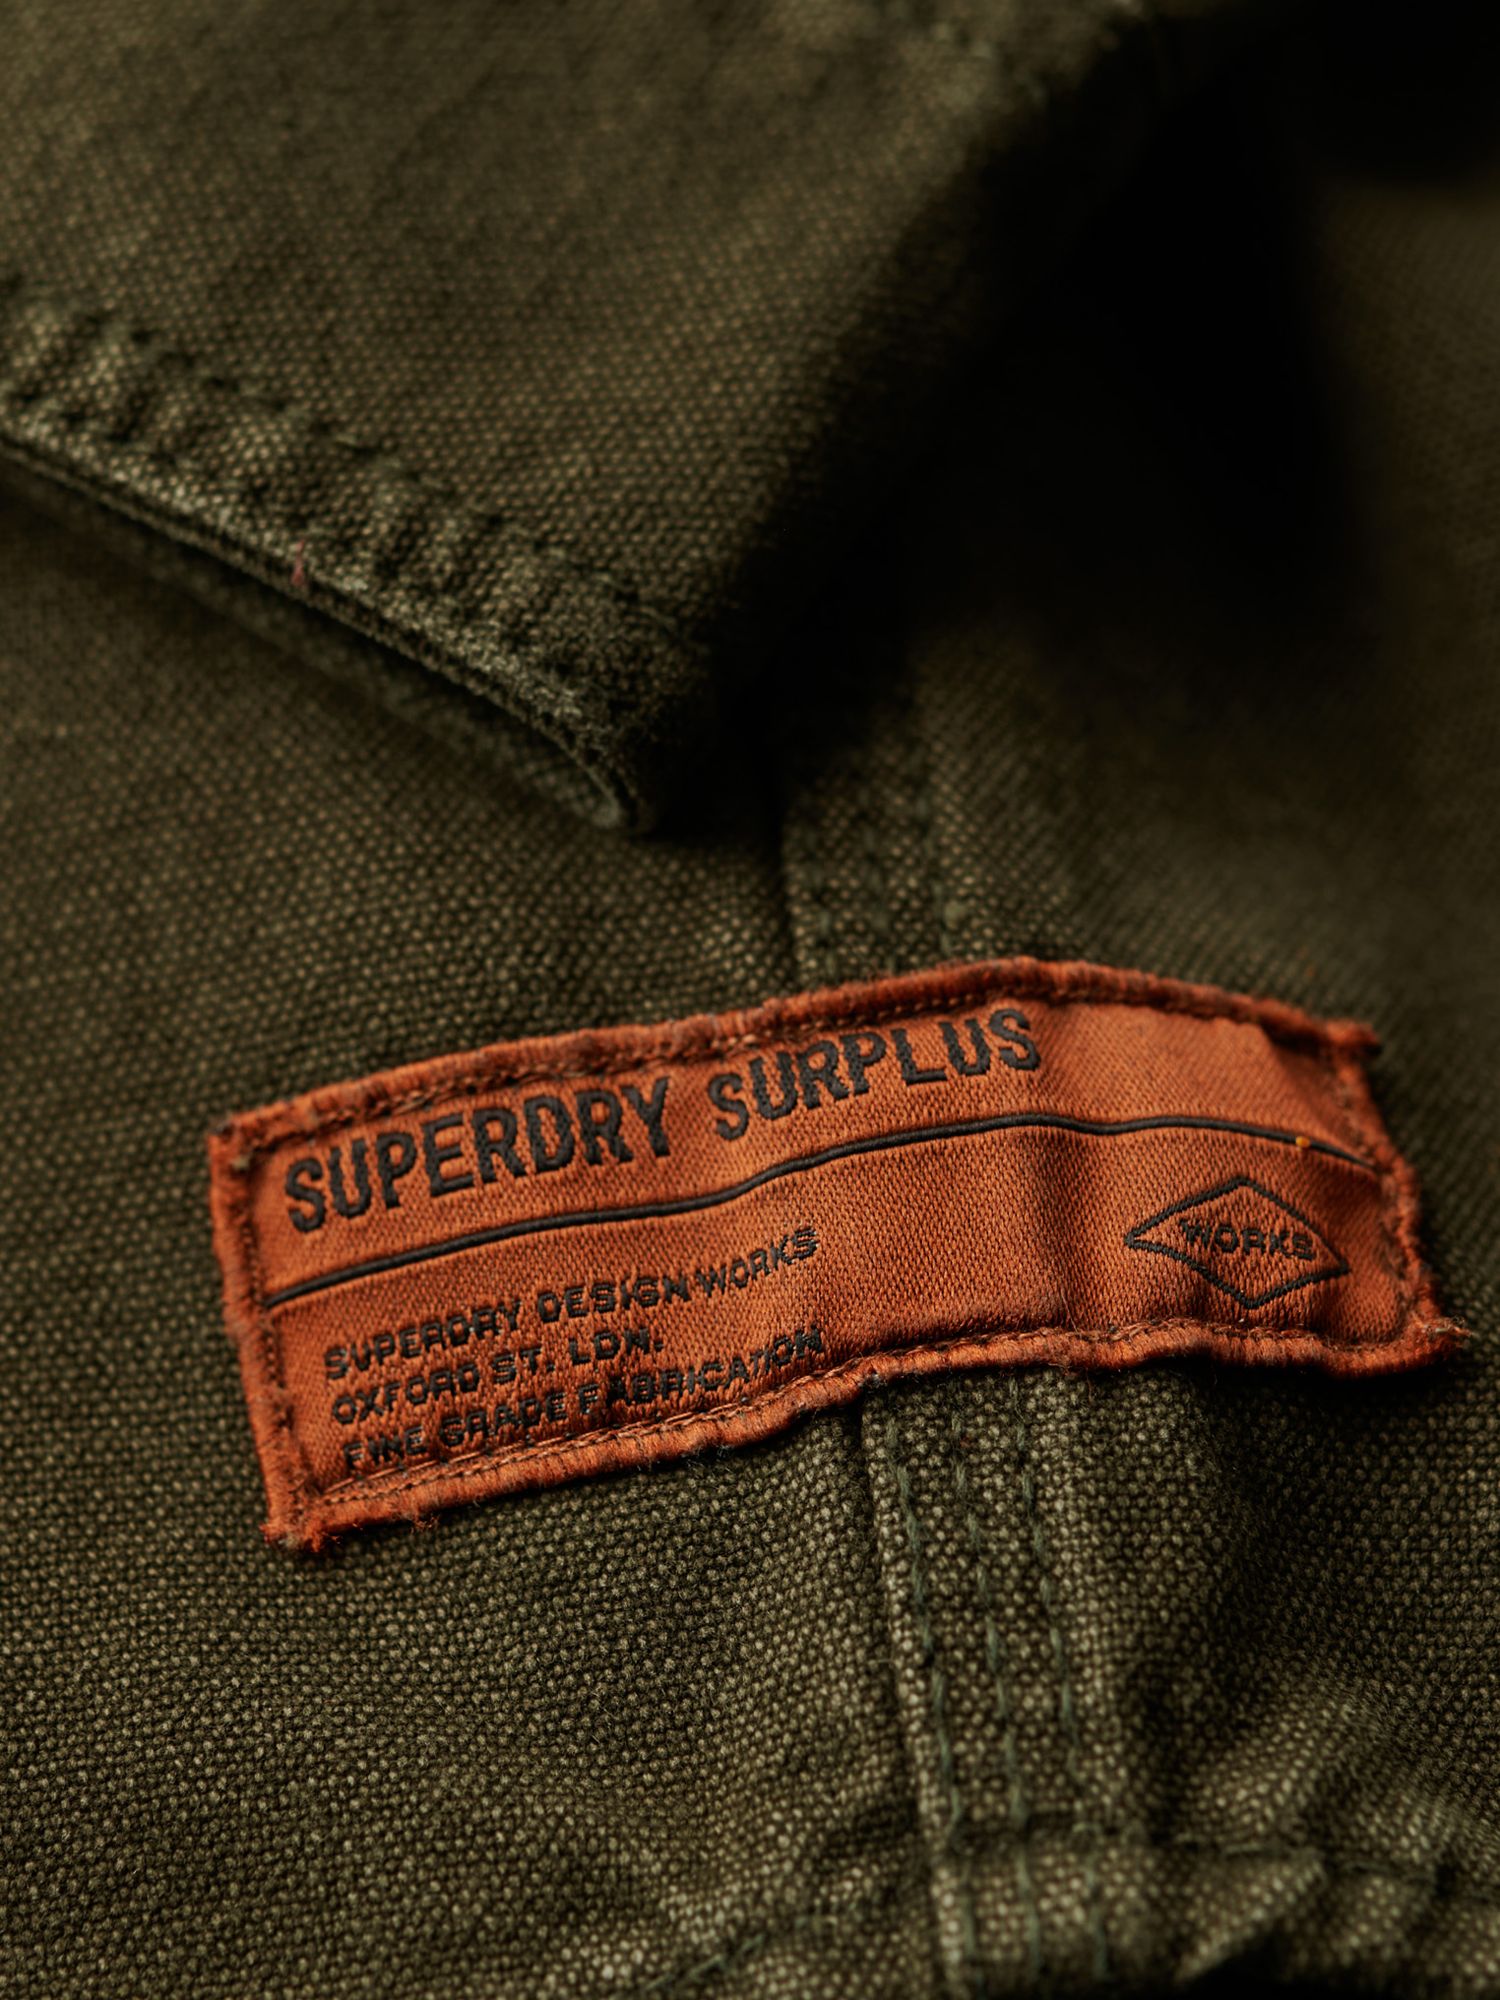 Buy Superdry Surplus Canvas Overshirt Online at johnlewis.com